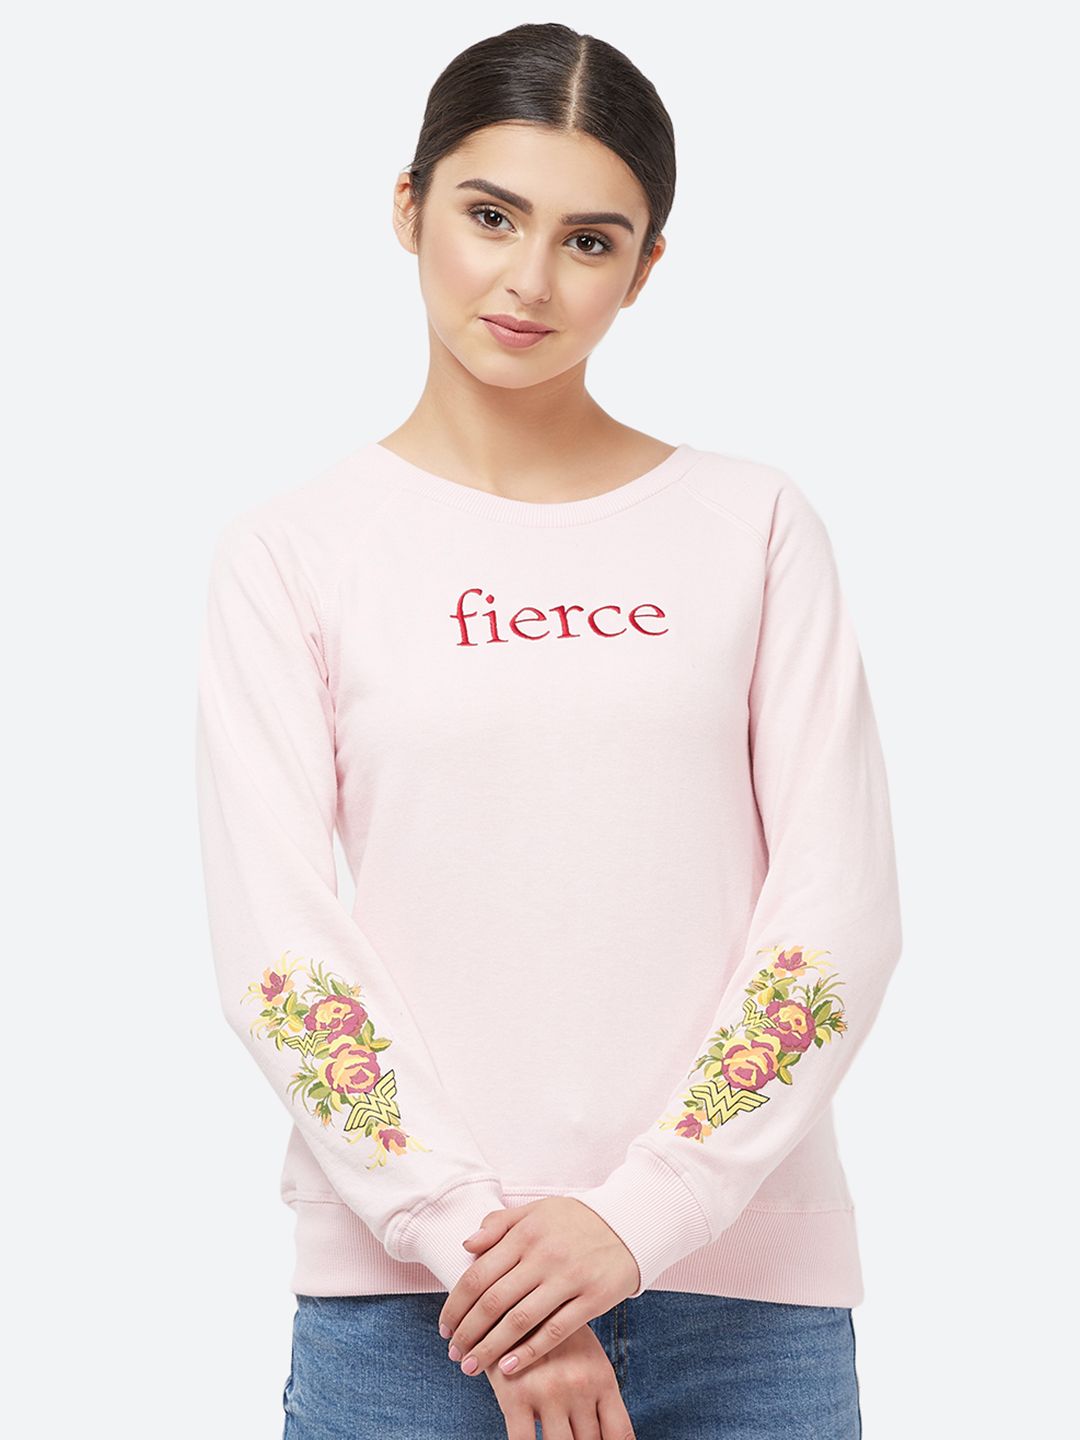 Free Authority Wonder Woman Print Pink Sweatshirt for Women Price in India